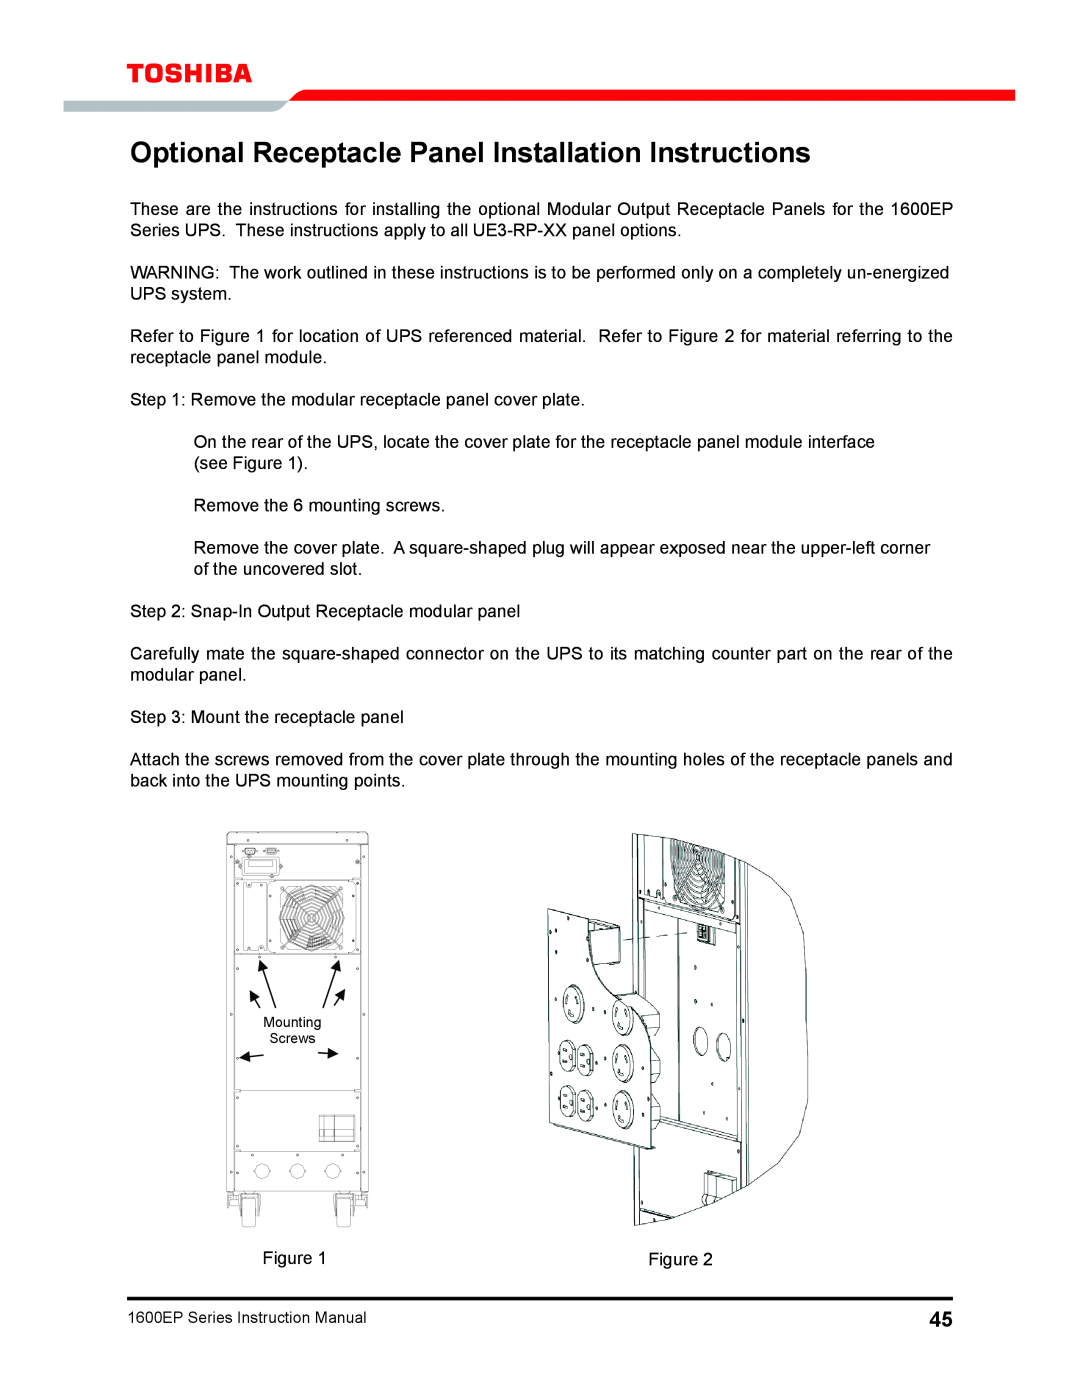 Toshiba 1600EP Series manual Optional Receptacle Panel Installation Instructions 